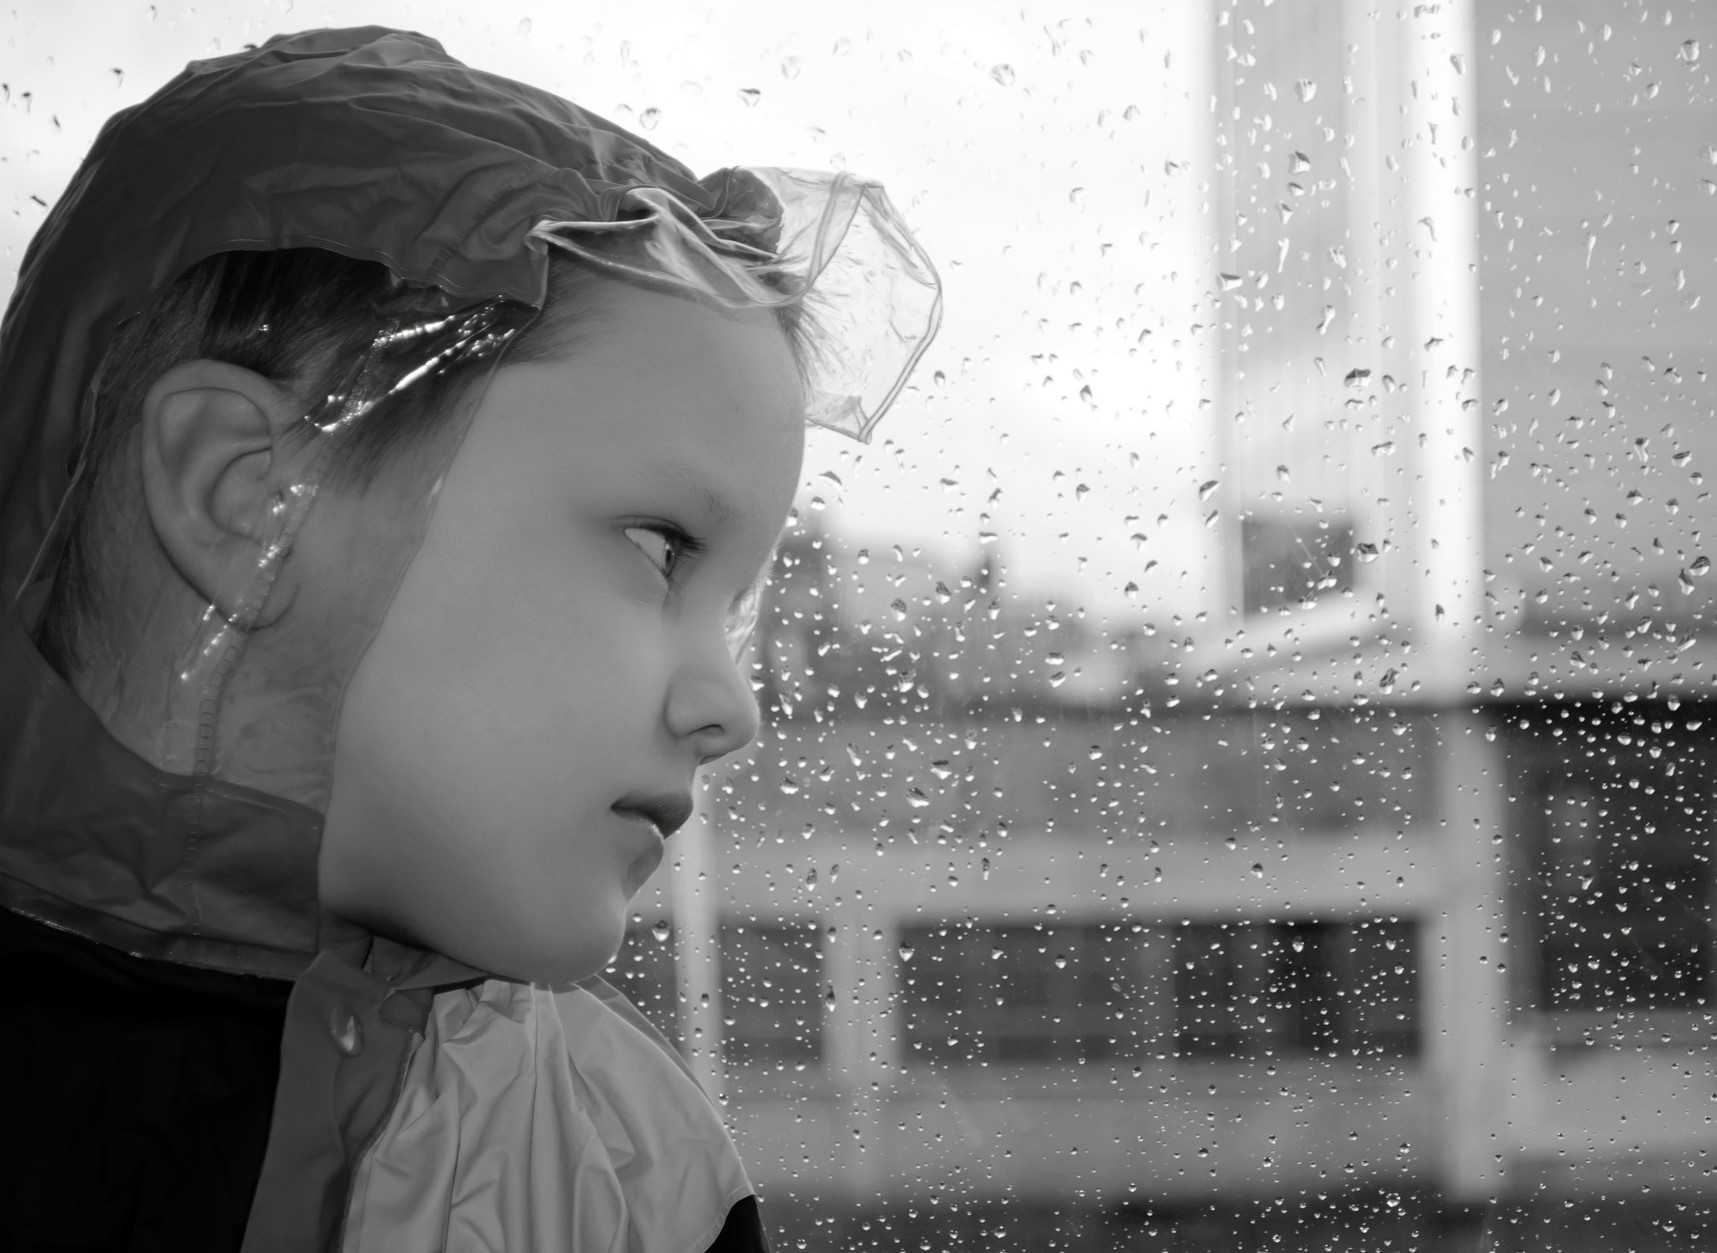 Sad Kid in a Rainy Day | Goodwill Car Donations